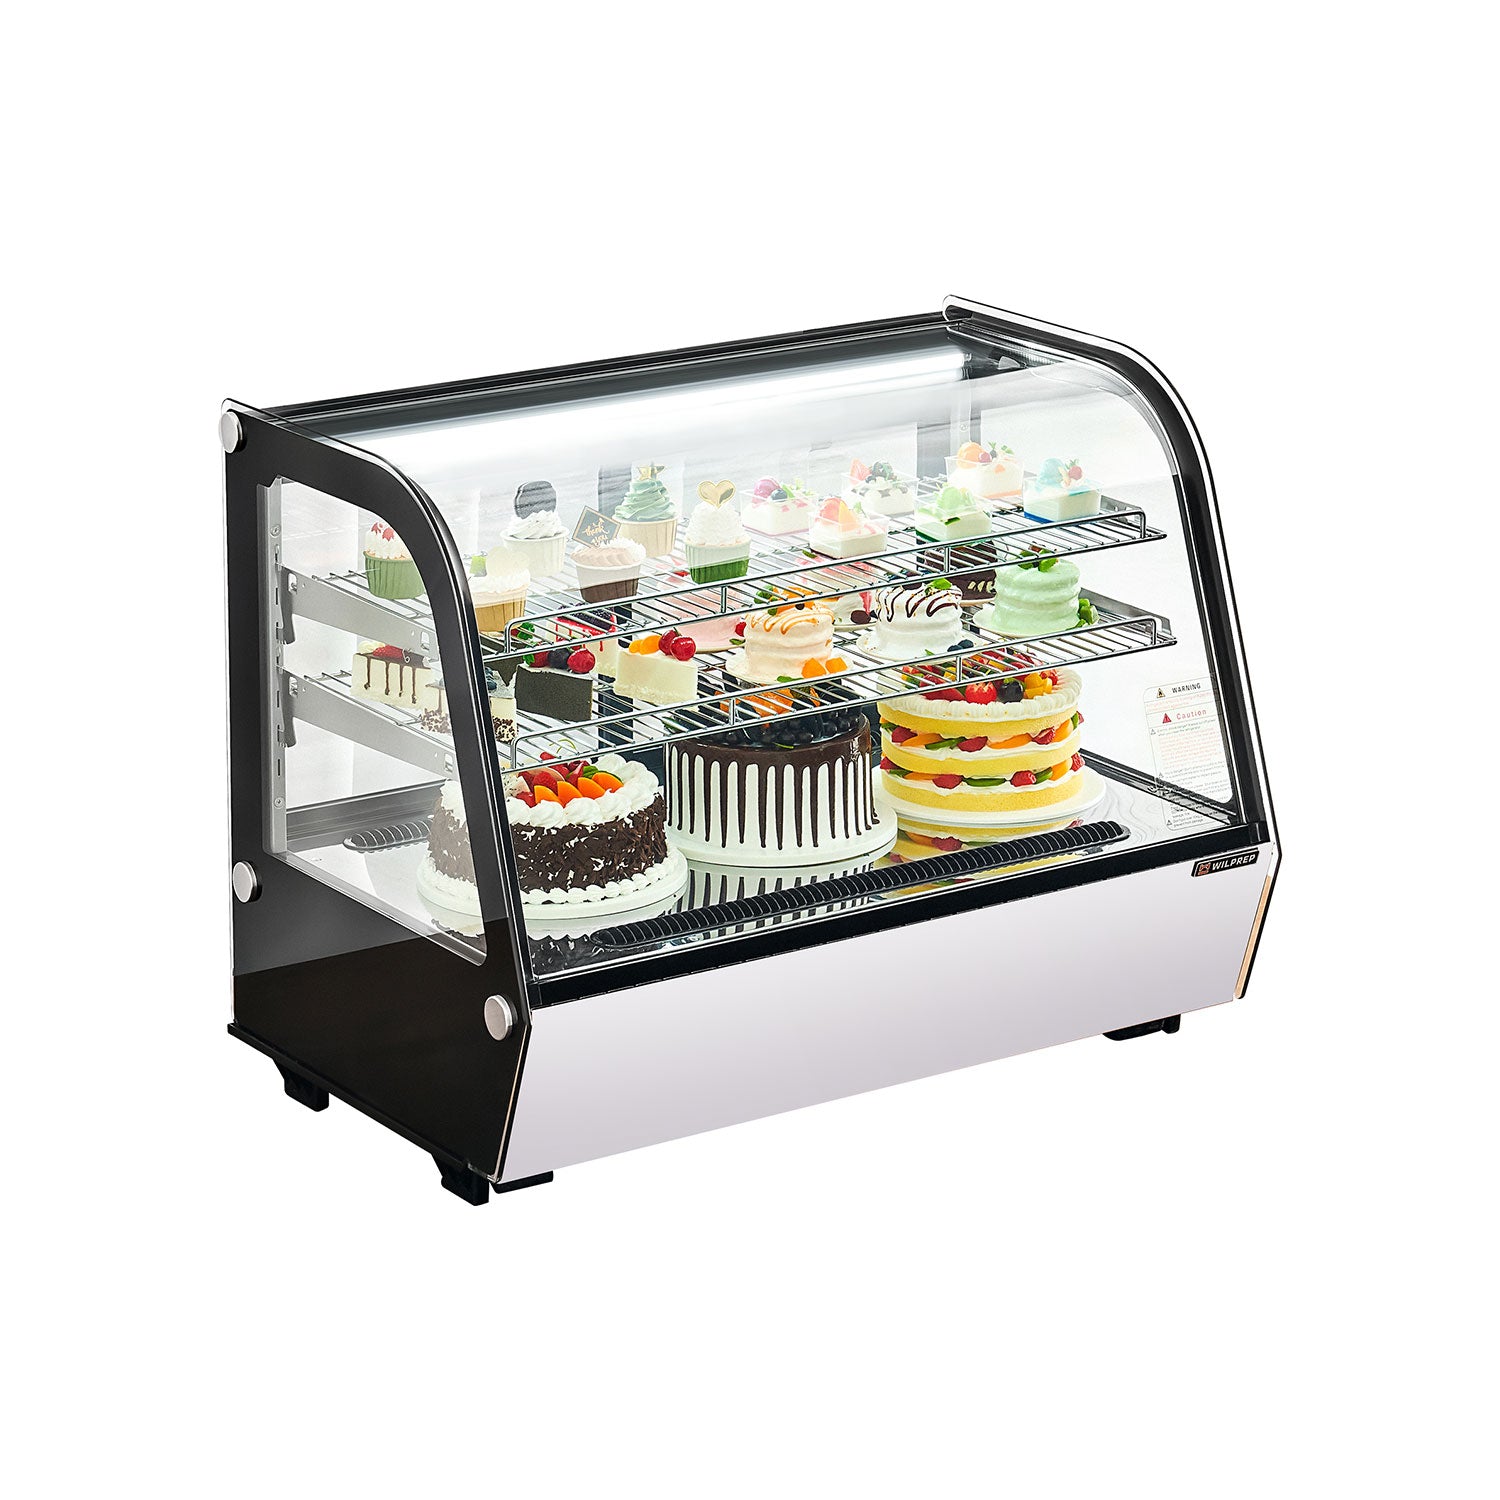 Wilprep 35-inch countertop display refrigerator